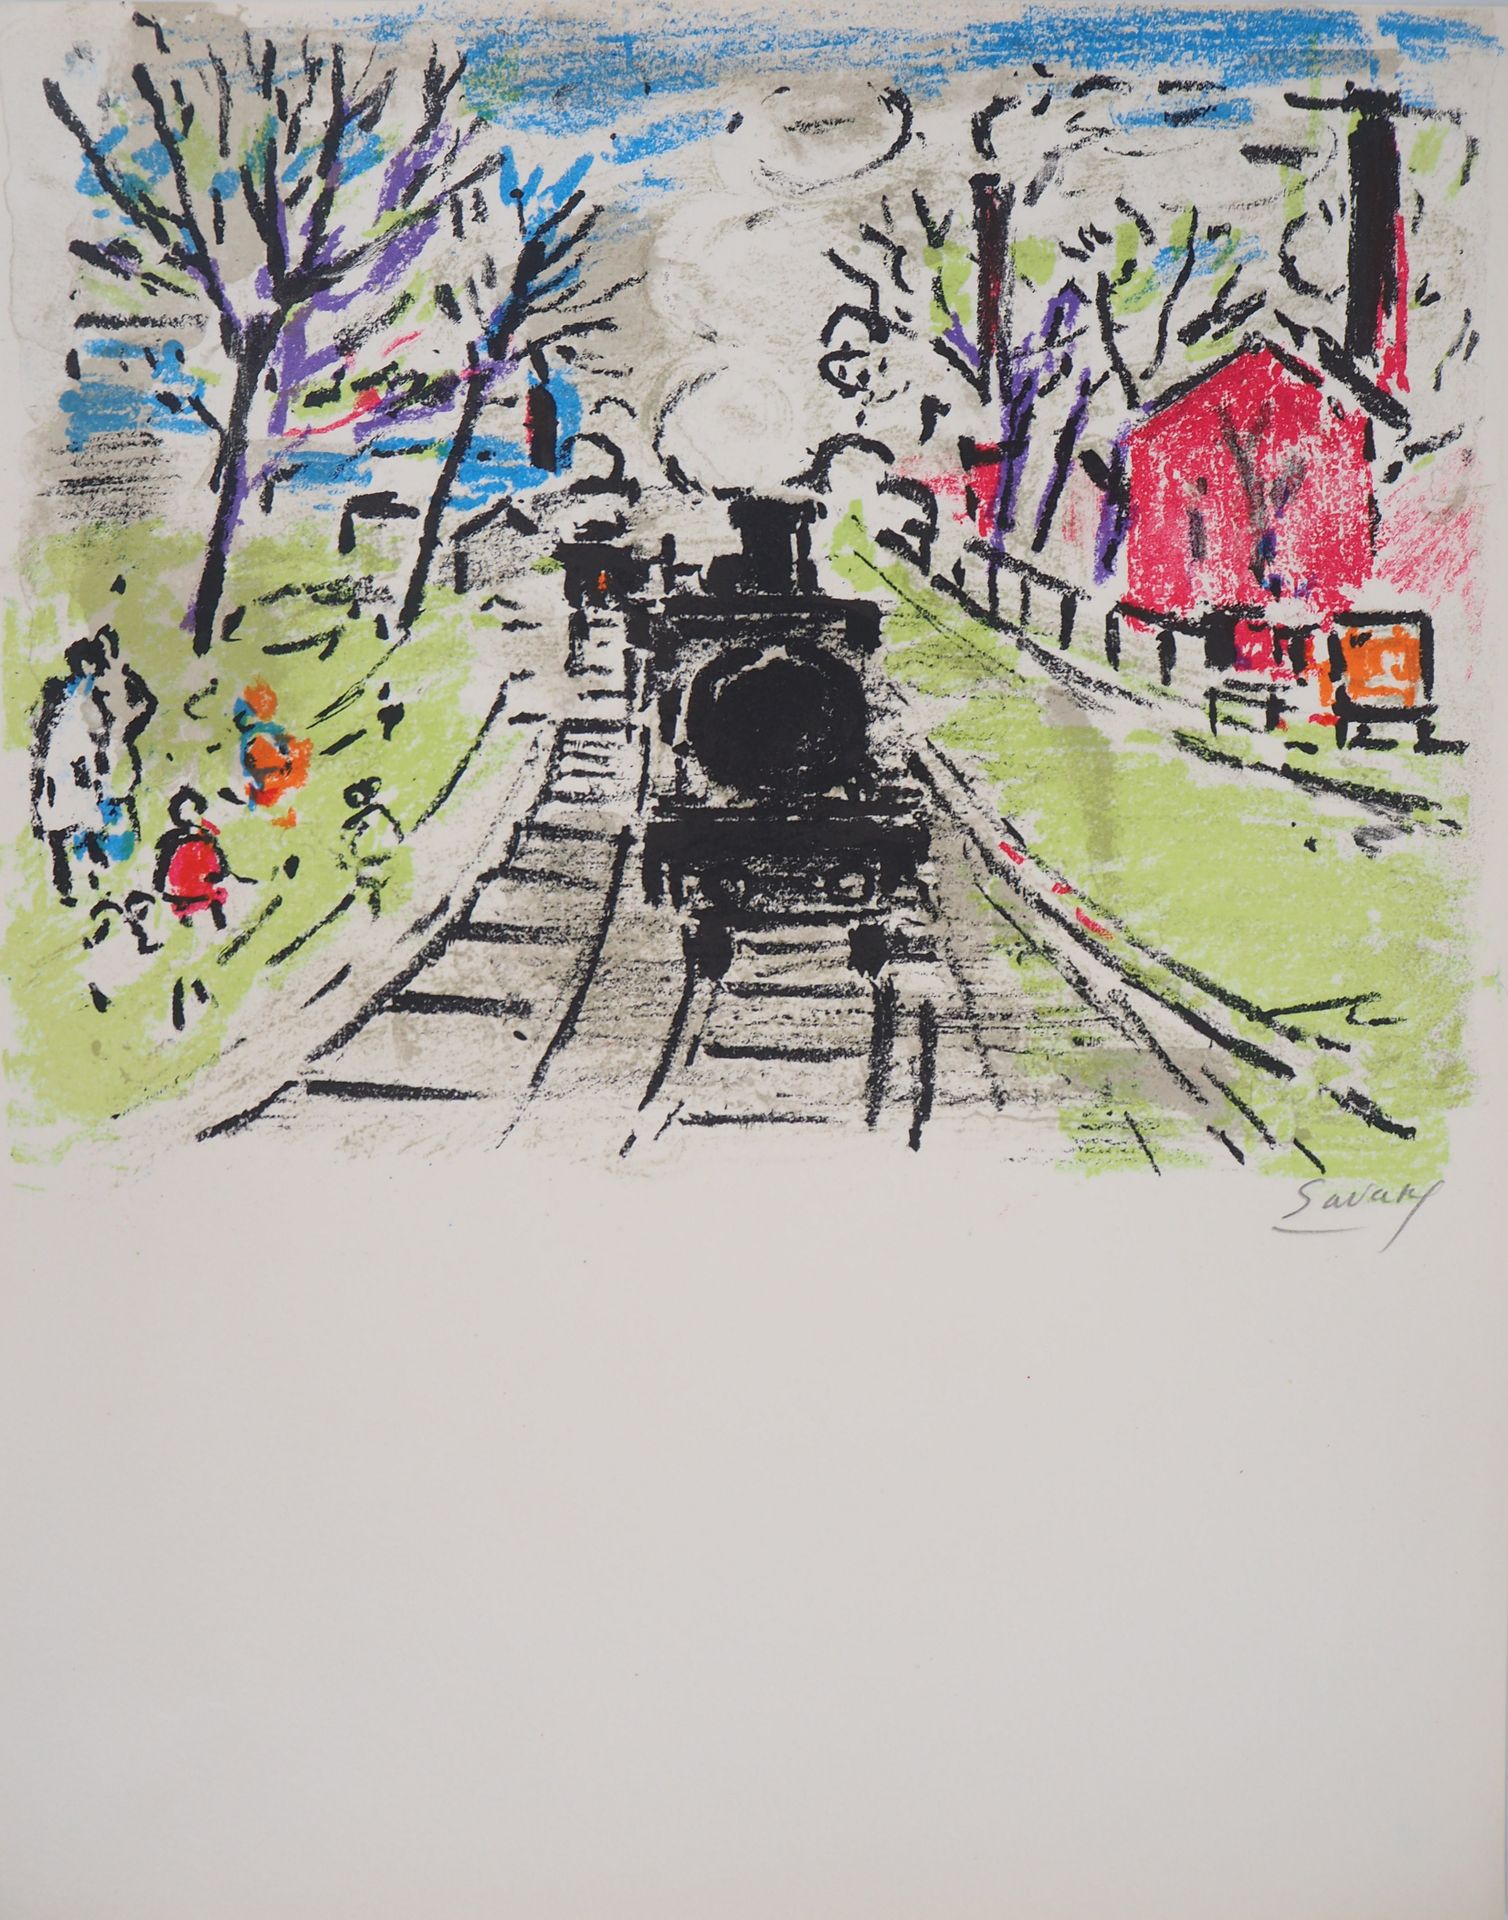 Robert SAVARY 罗伯特-萨瓦里

郊区的小火车，1969年

原始石版画（Mourlot工作室）。

右下方有铅笔签名

在Arches牛皮纸上

&hellip;